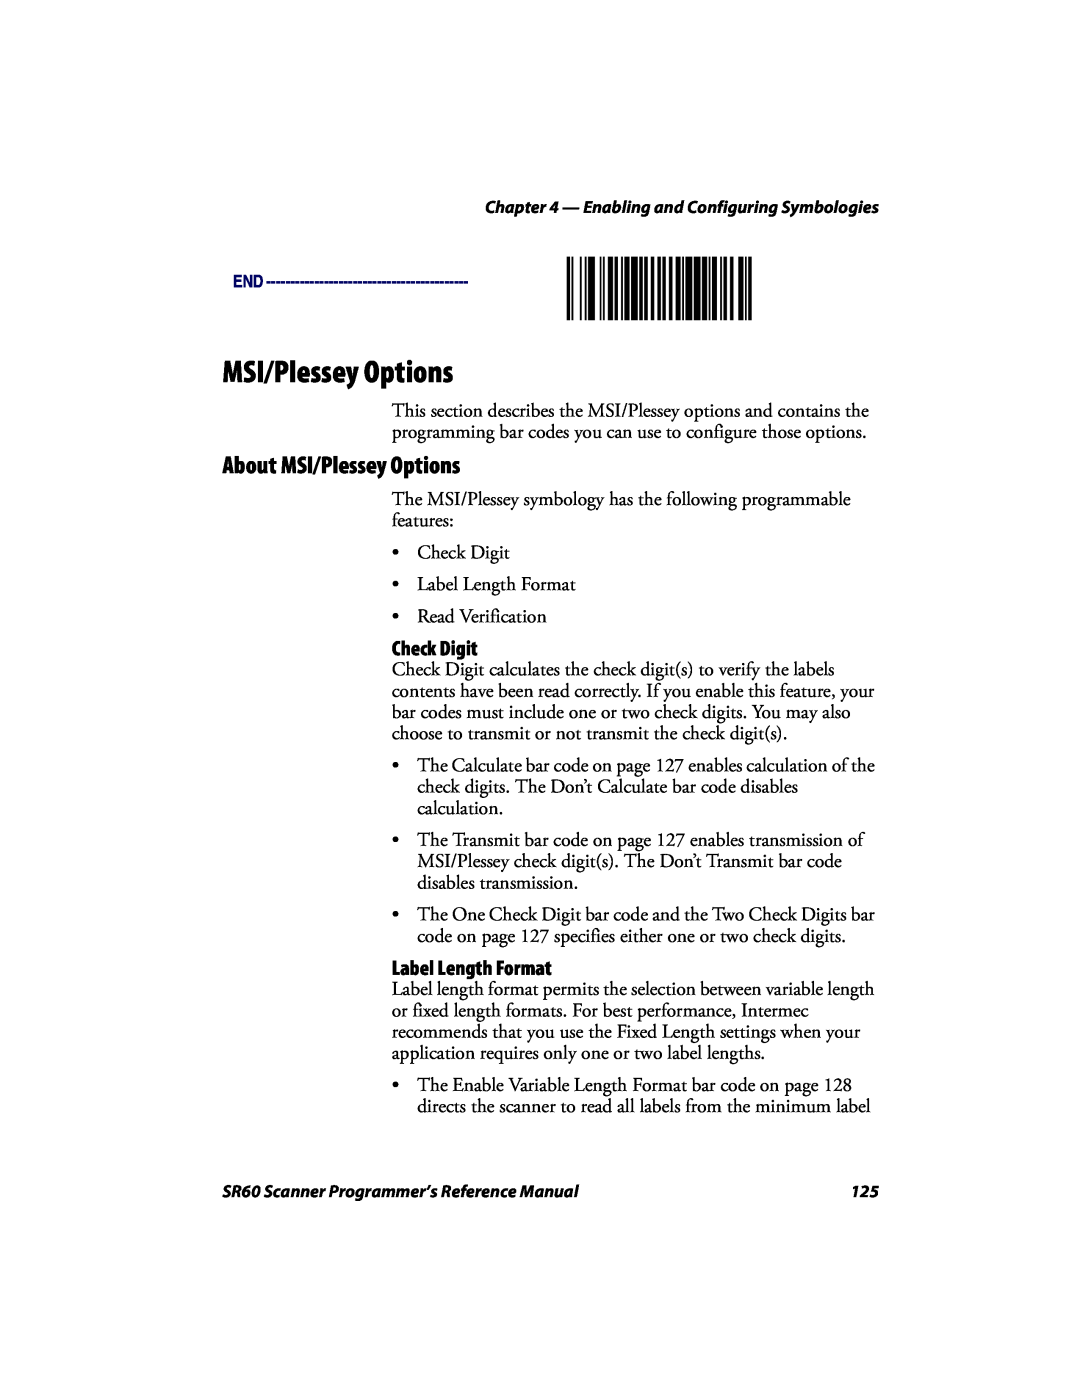 Intermec SR60 manual About MSI/Plessey Options, Check Digit, Label Length Format 